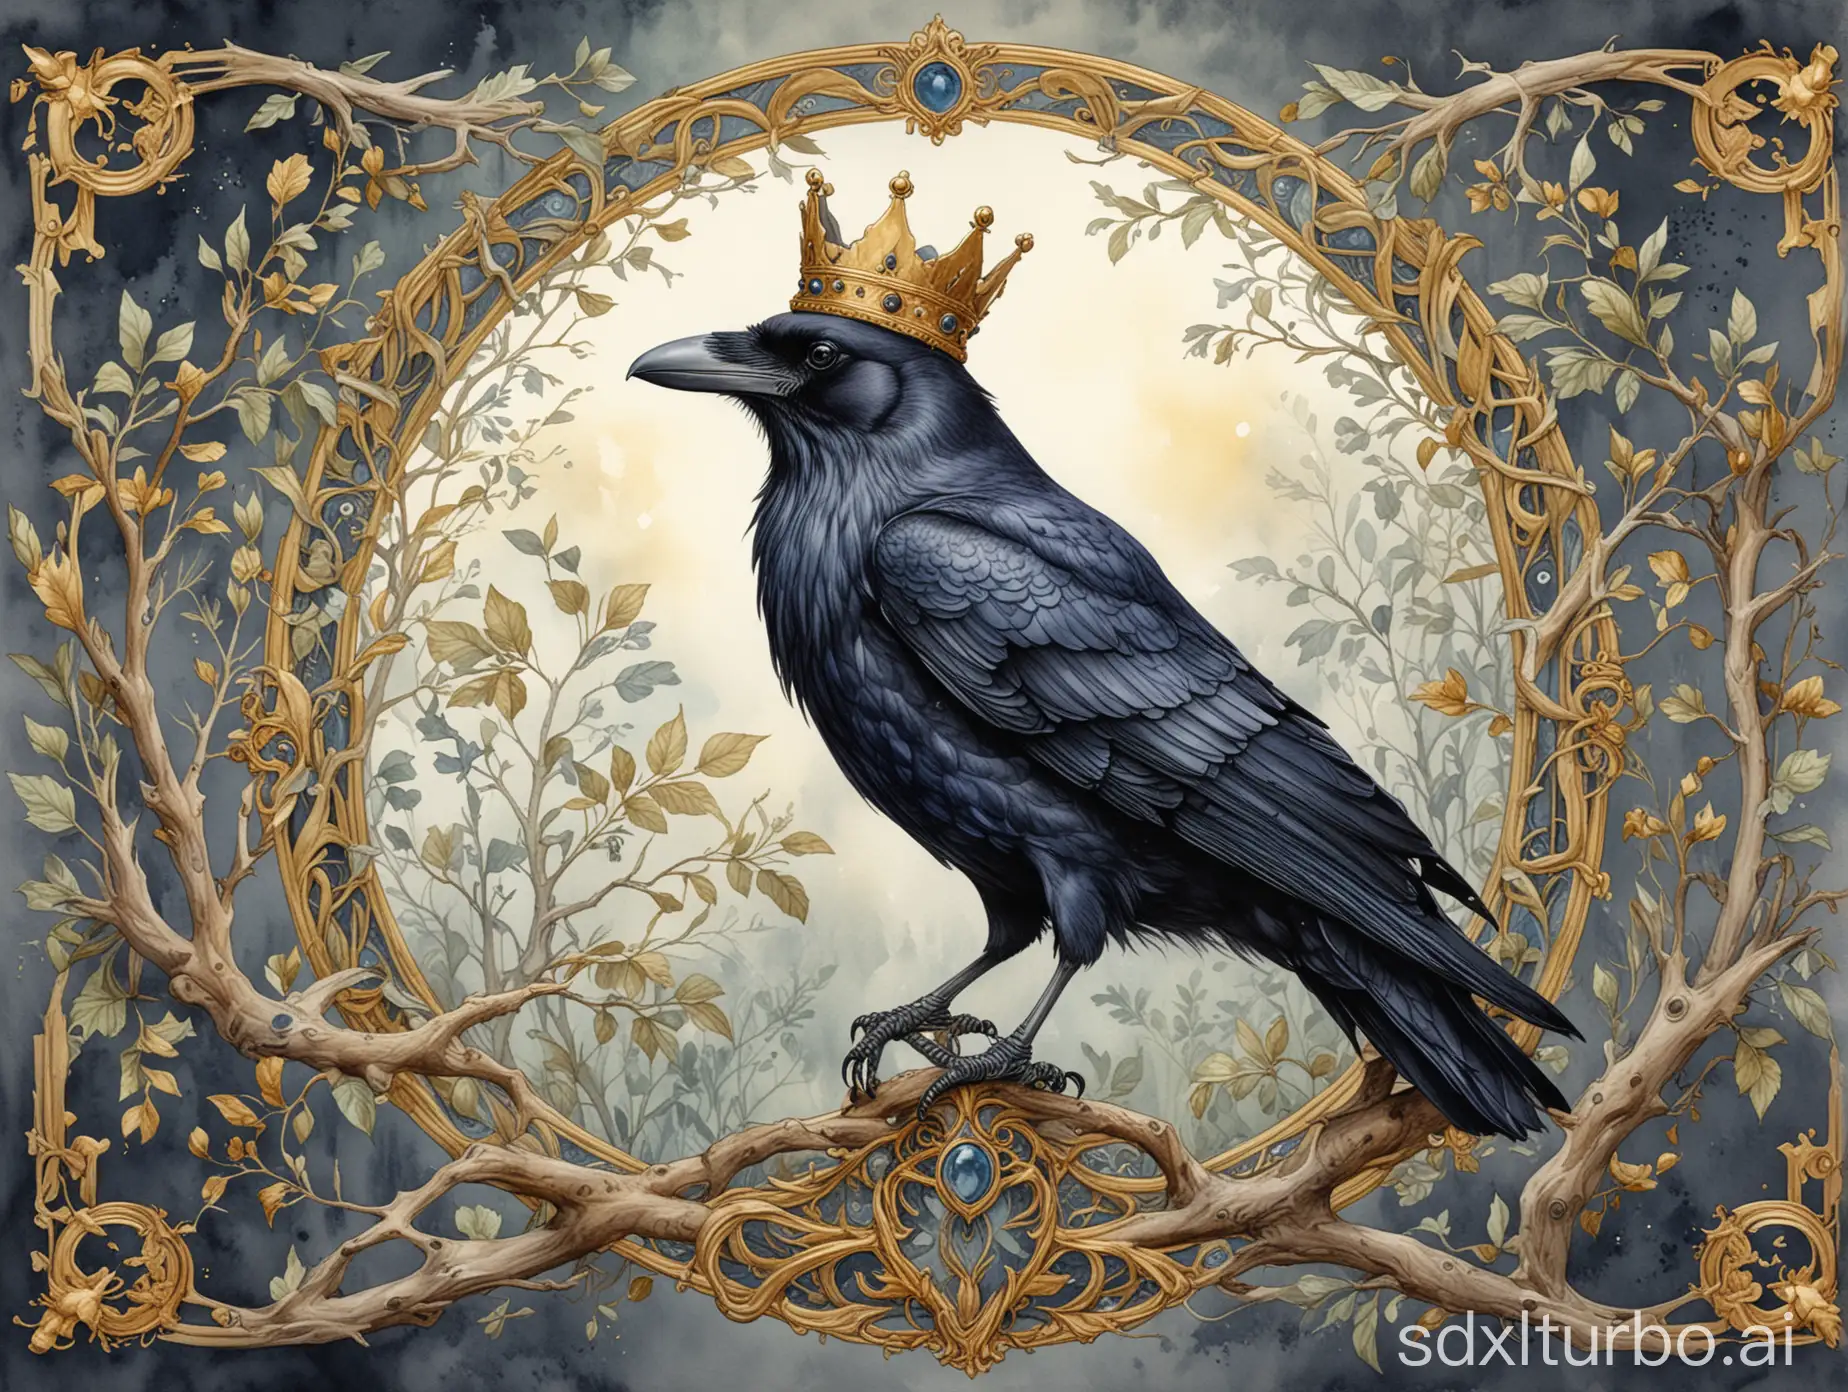 Regal-Raven-with-Golden-Crown-Perched-on-Branch-Detailed-Art-Nouveau-Watercolor-Illustration